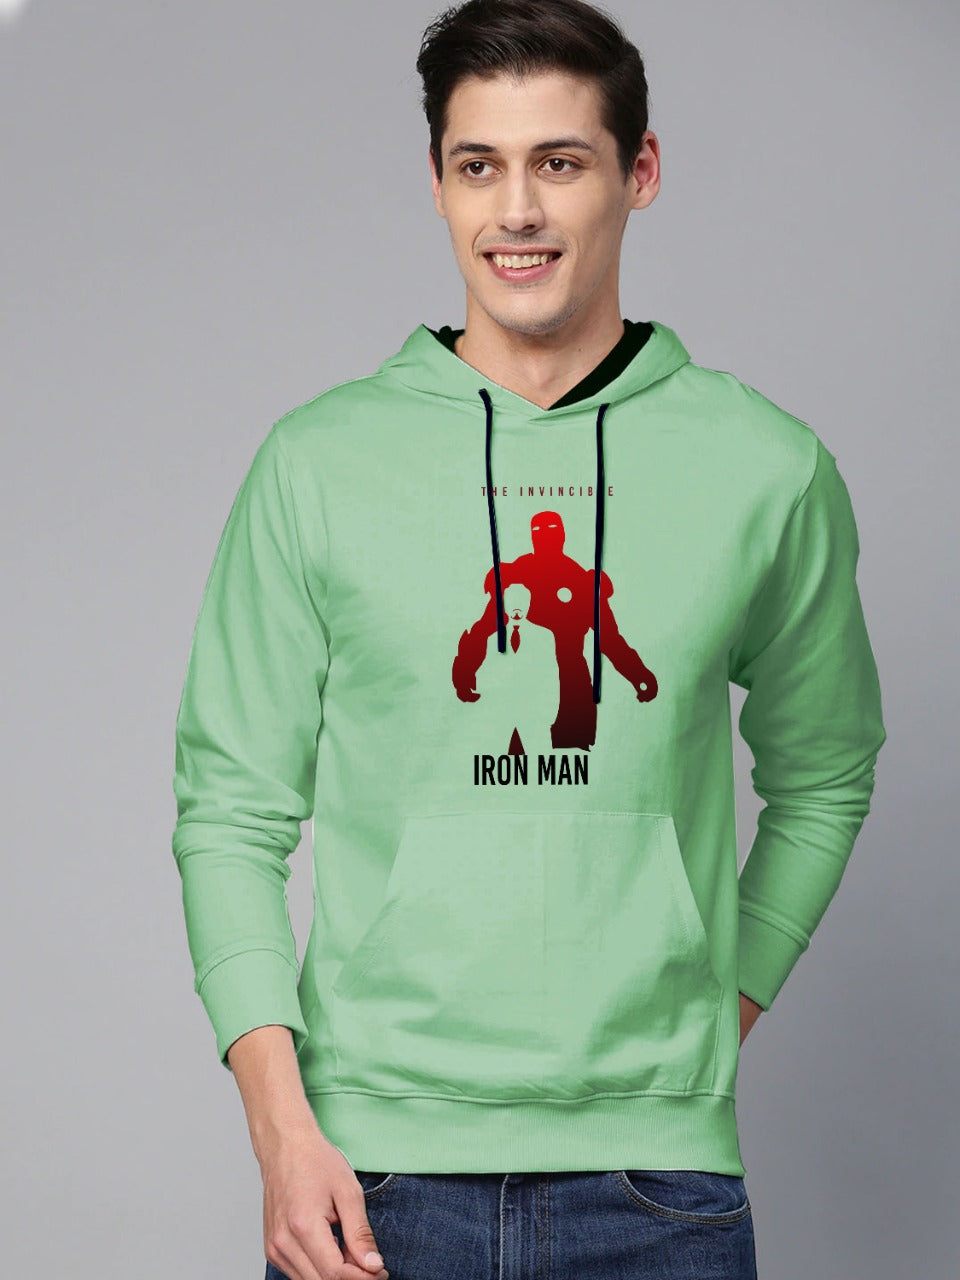 LazyChunks iron man hoodie hoodies for mens stylish cotton hoodie ...